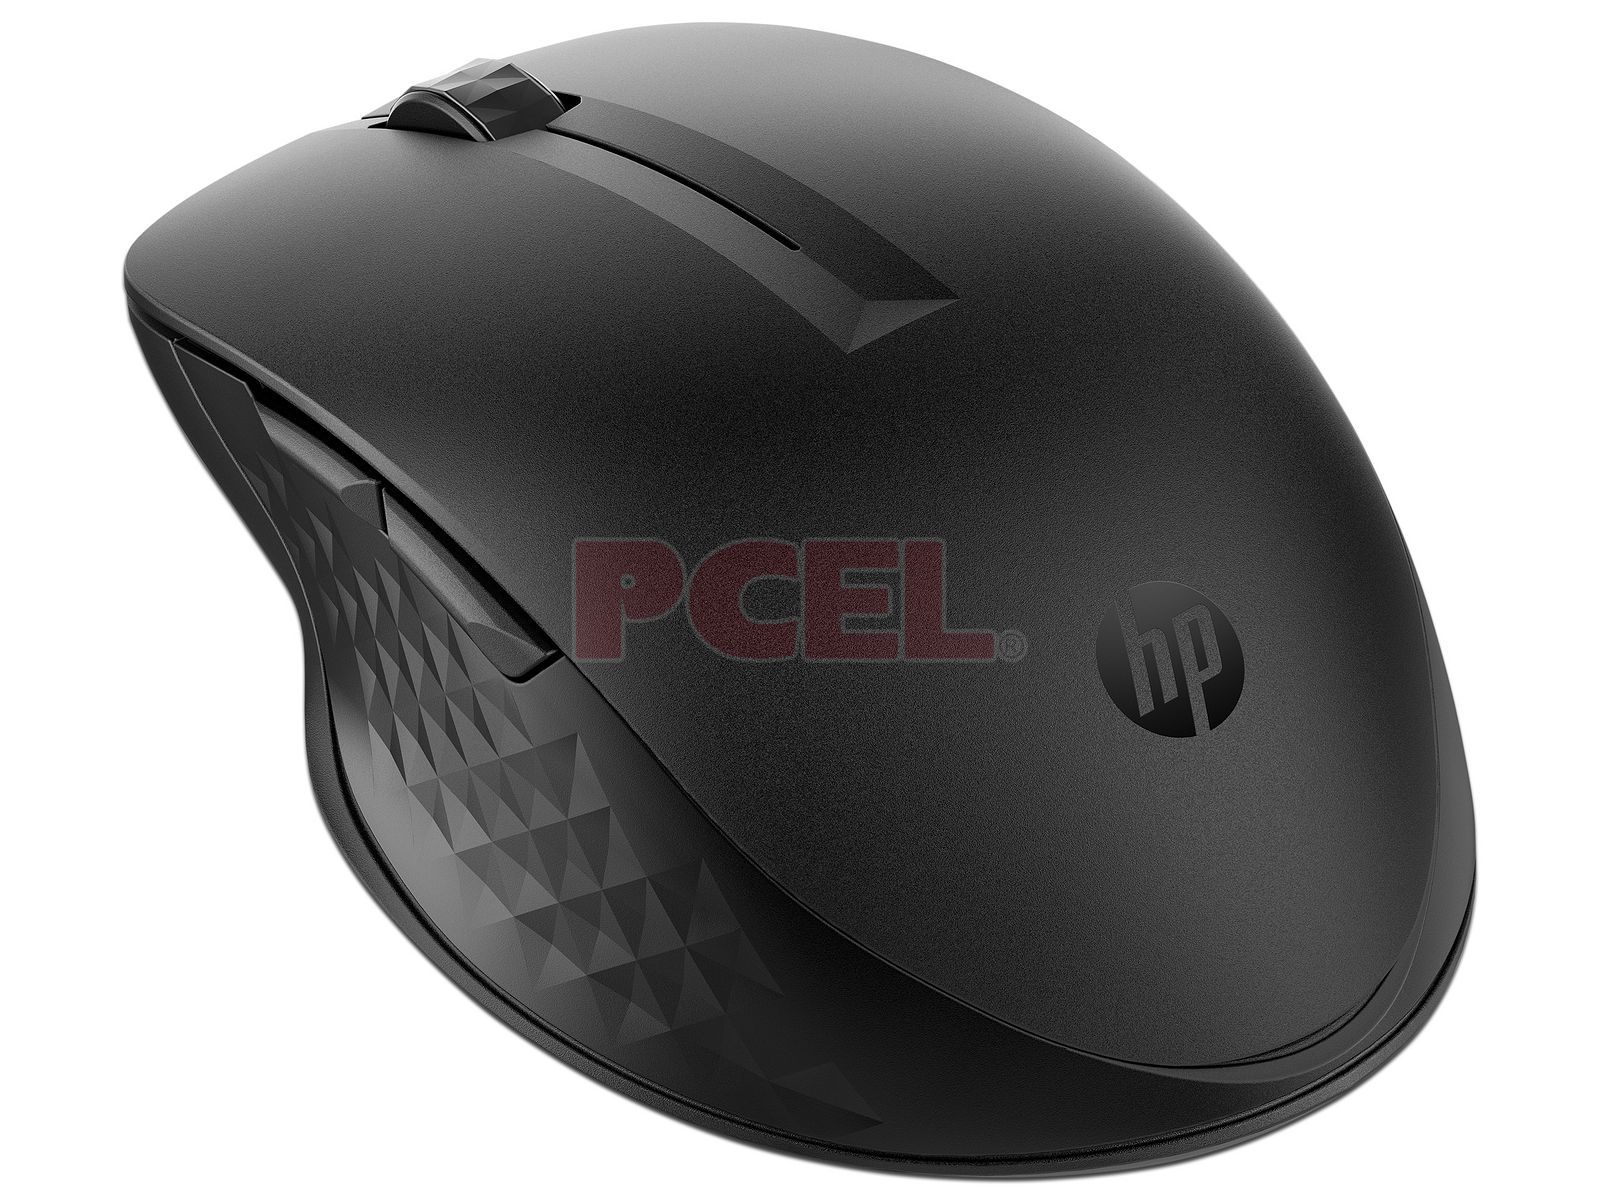 Hewlett Packard HP USB Mouse ratón USB tipo A Negro